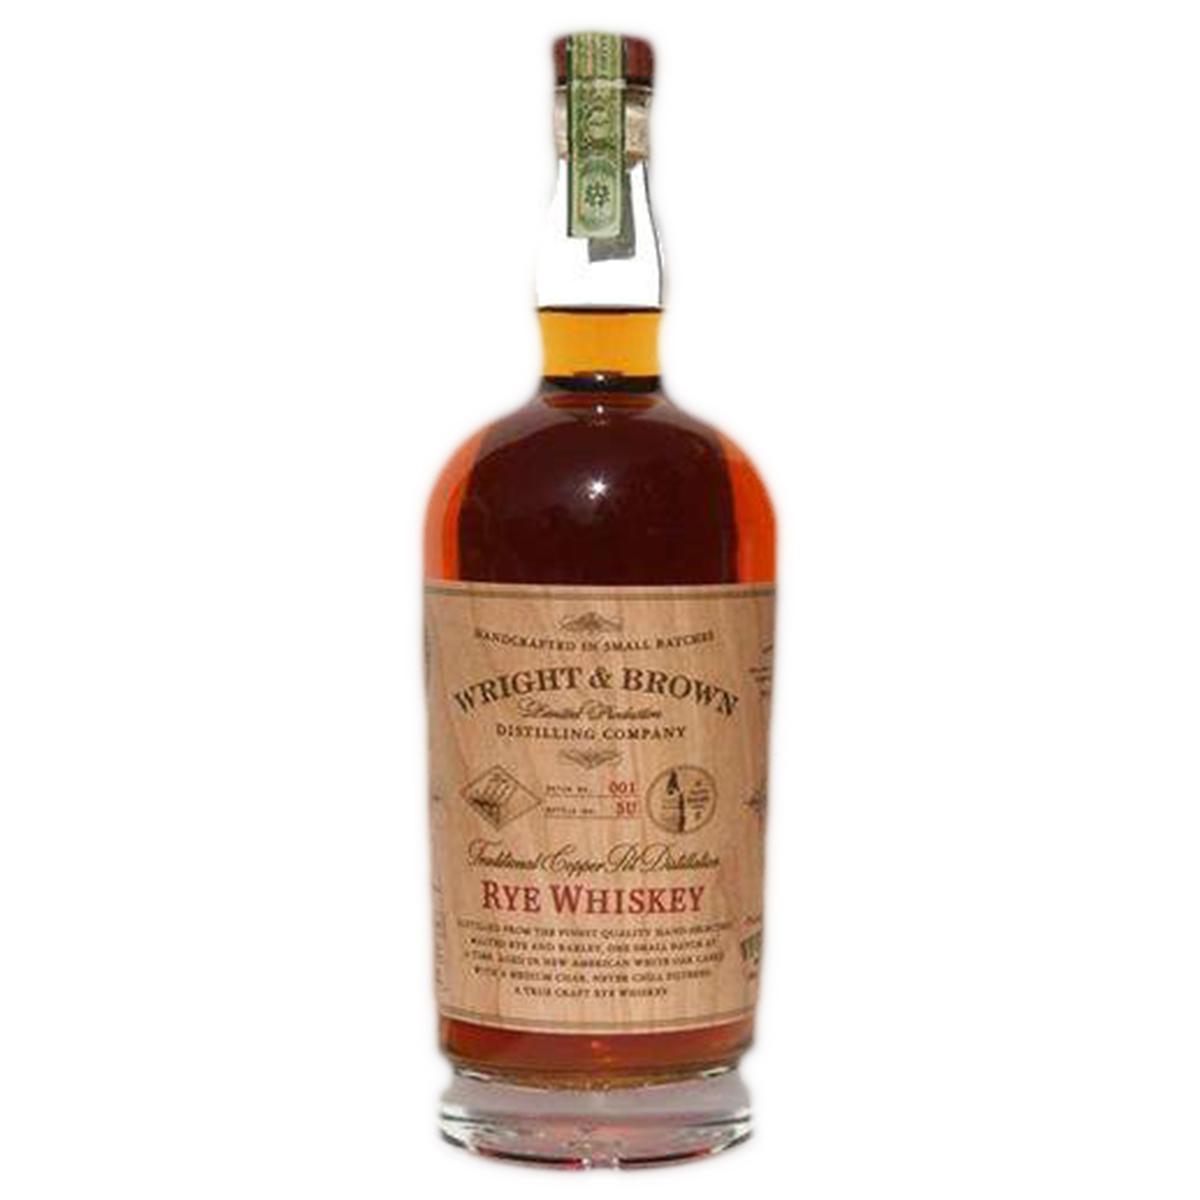 Wright & Brown - Rye Whiskey